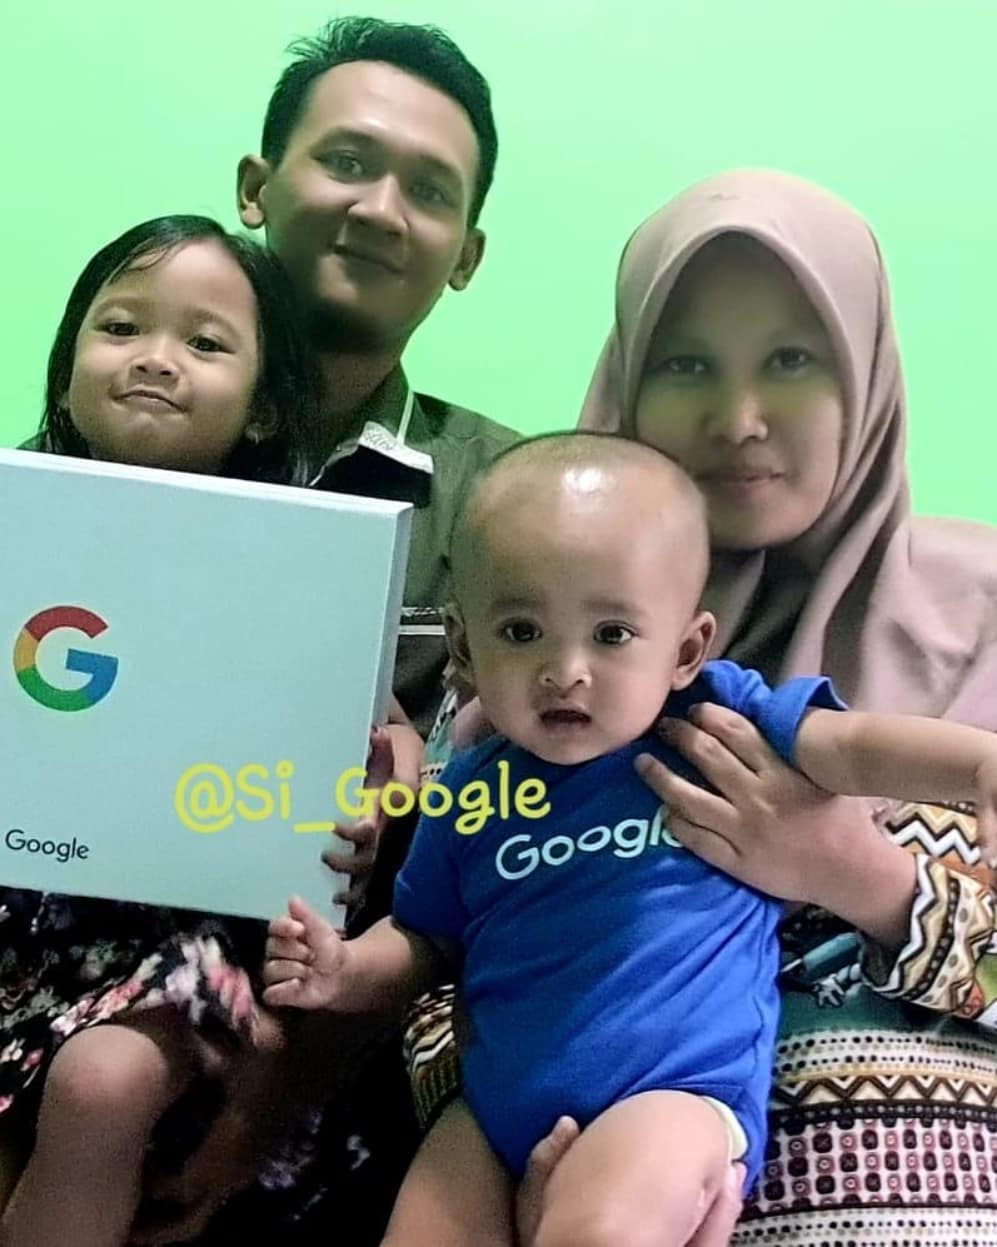      Google     